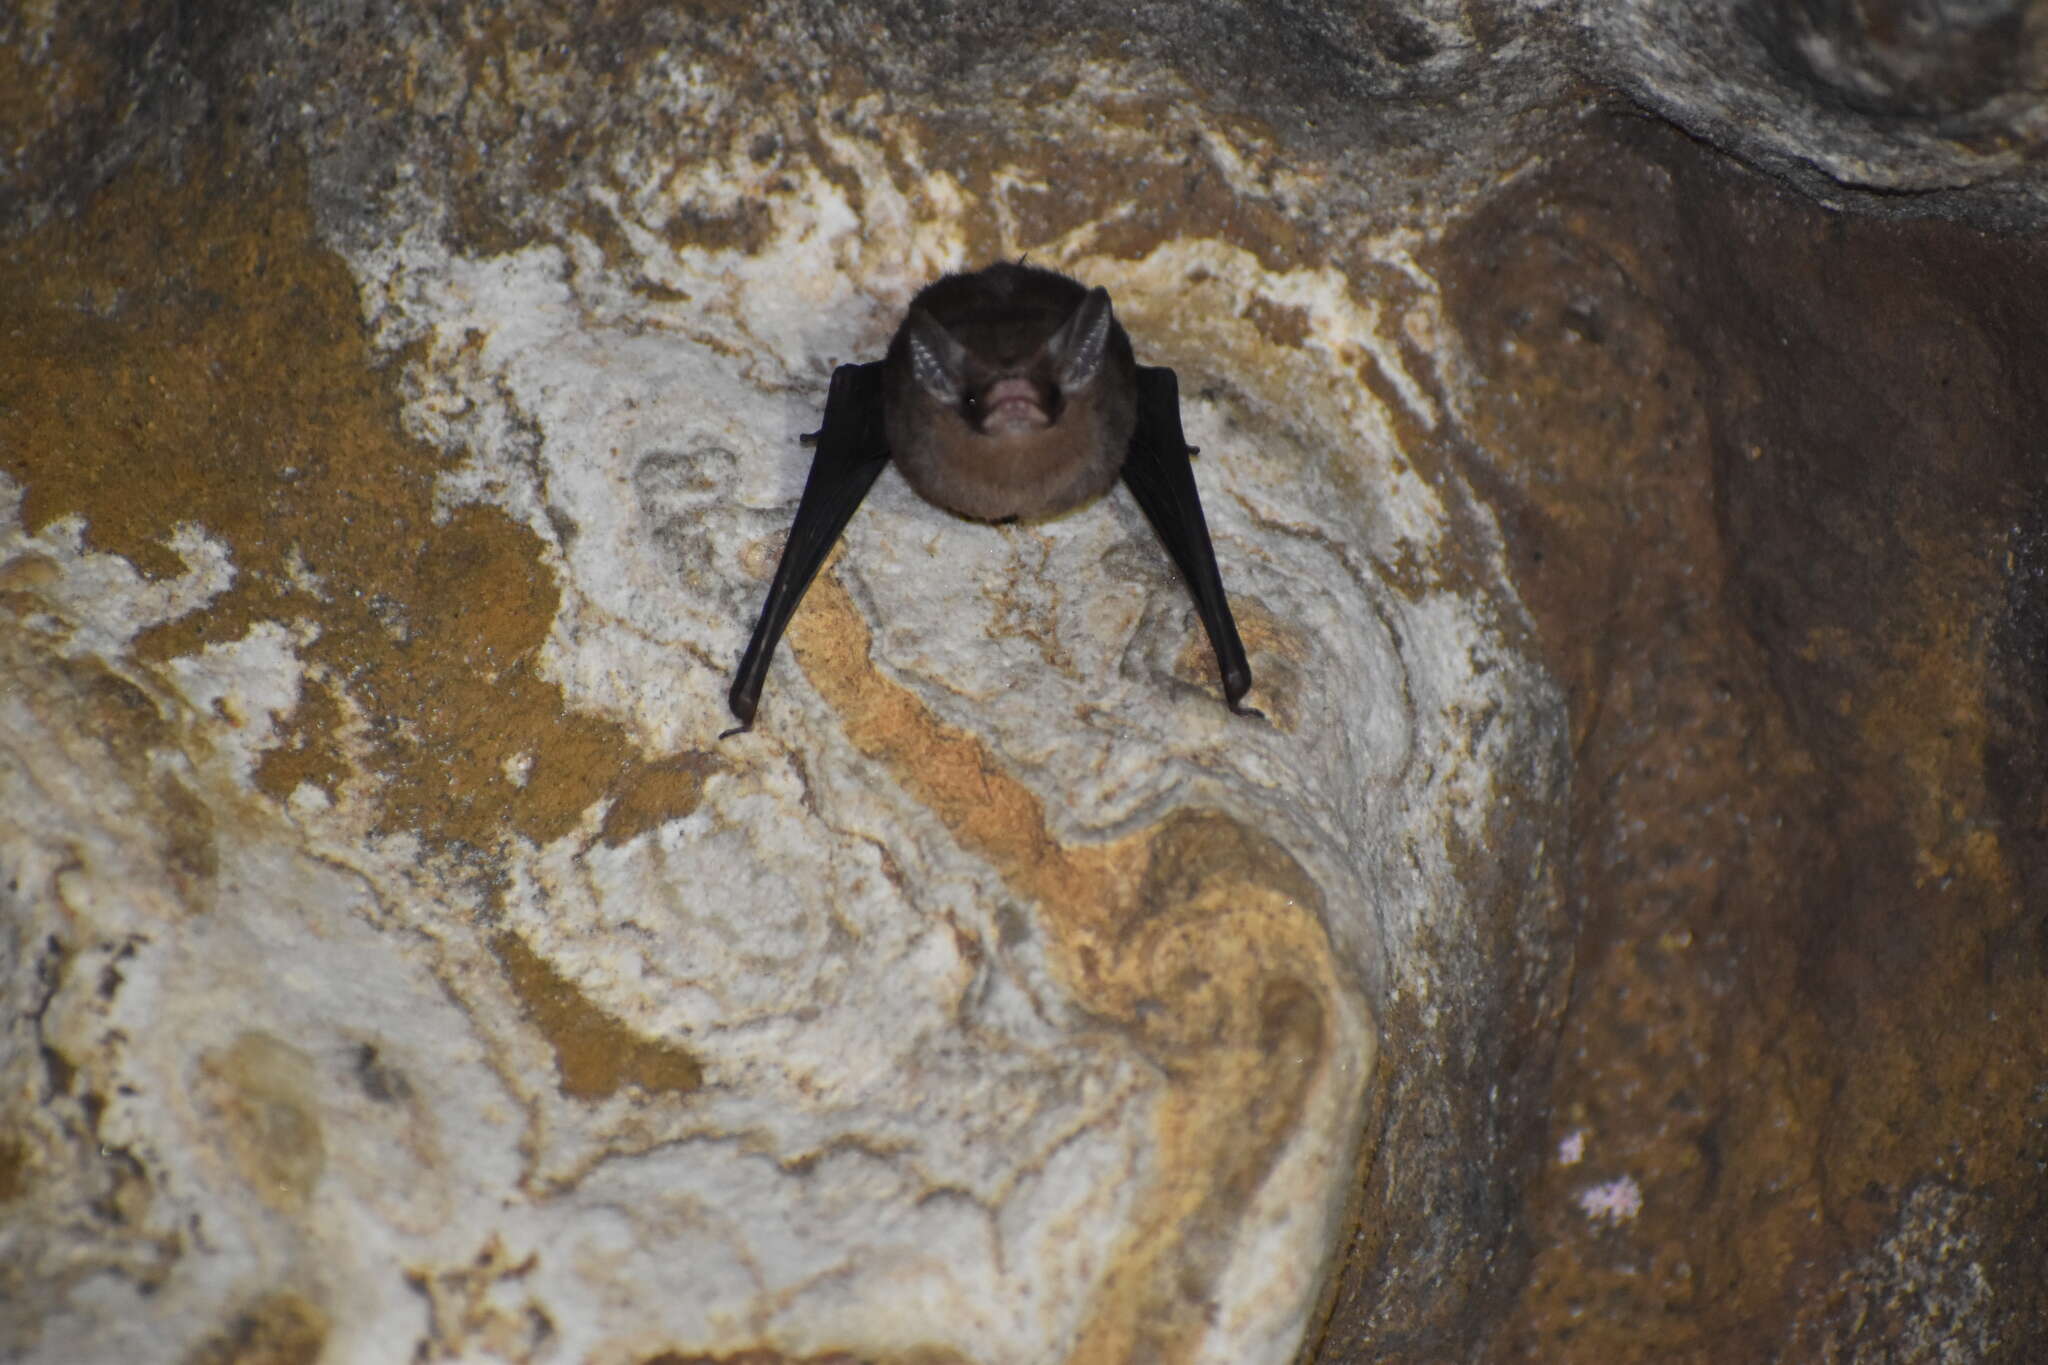 Image of Sac-winged bats